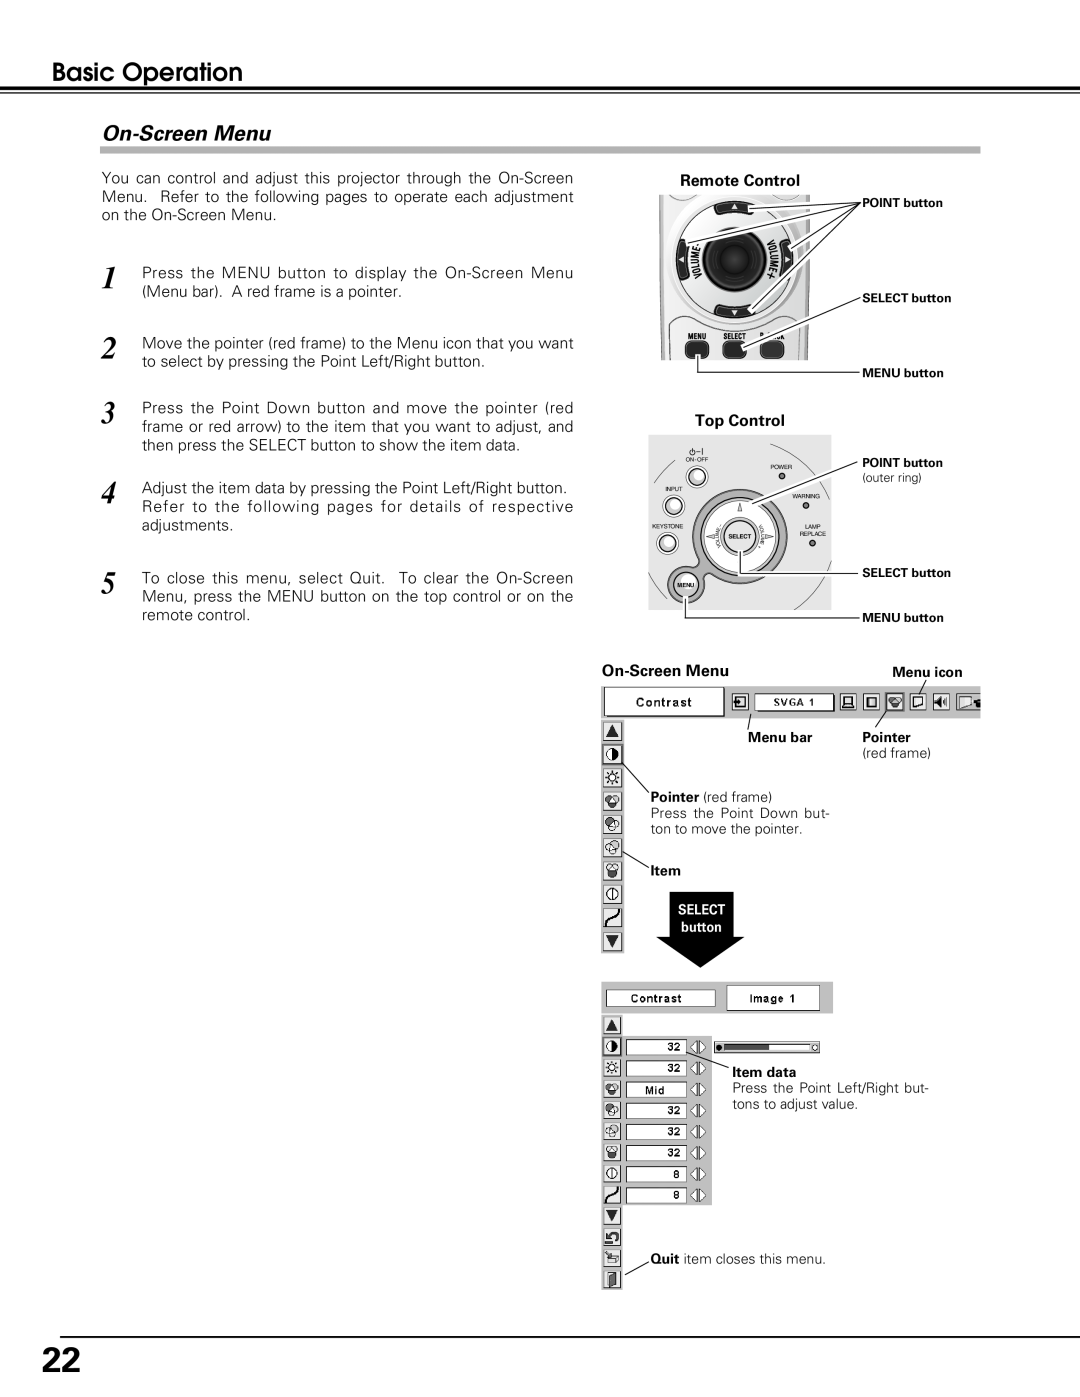 Sanyo PLC-SL20 owner manual On-Screen Menu, Basic Operation, Remote Control, Top Control 